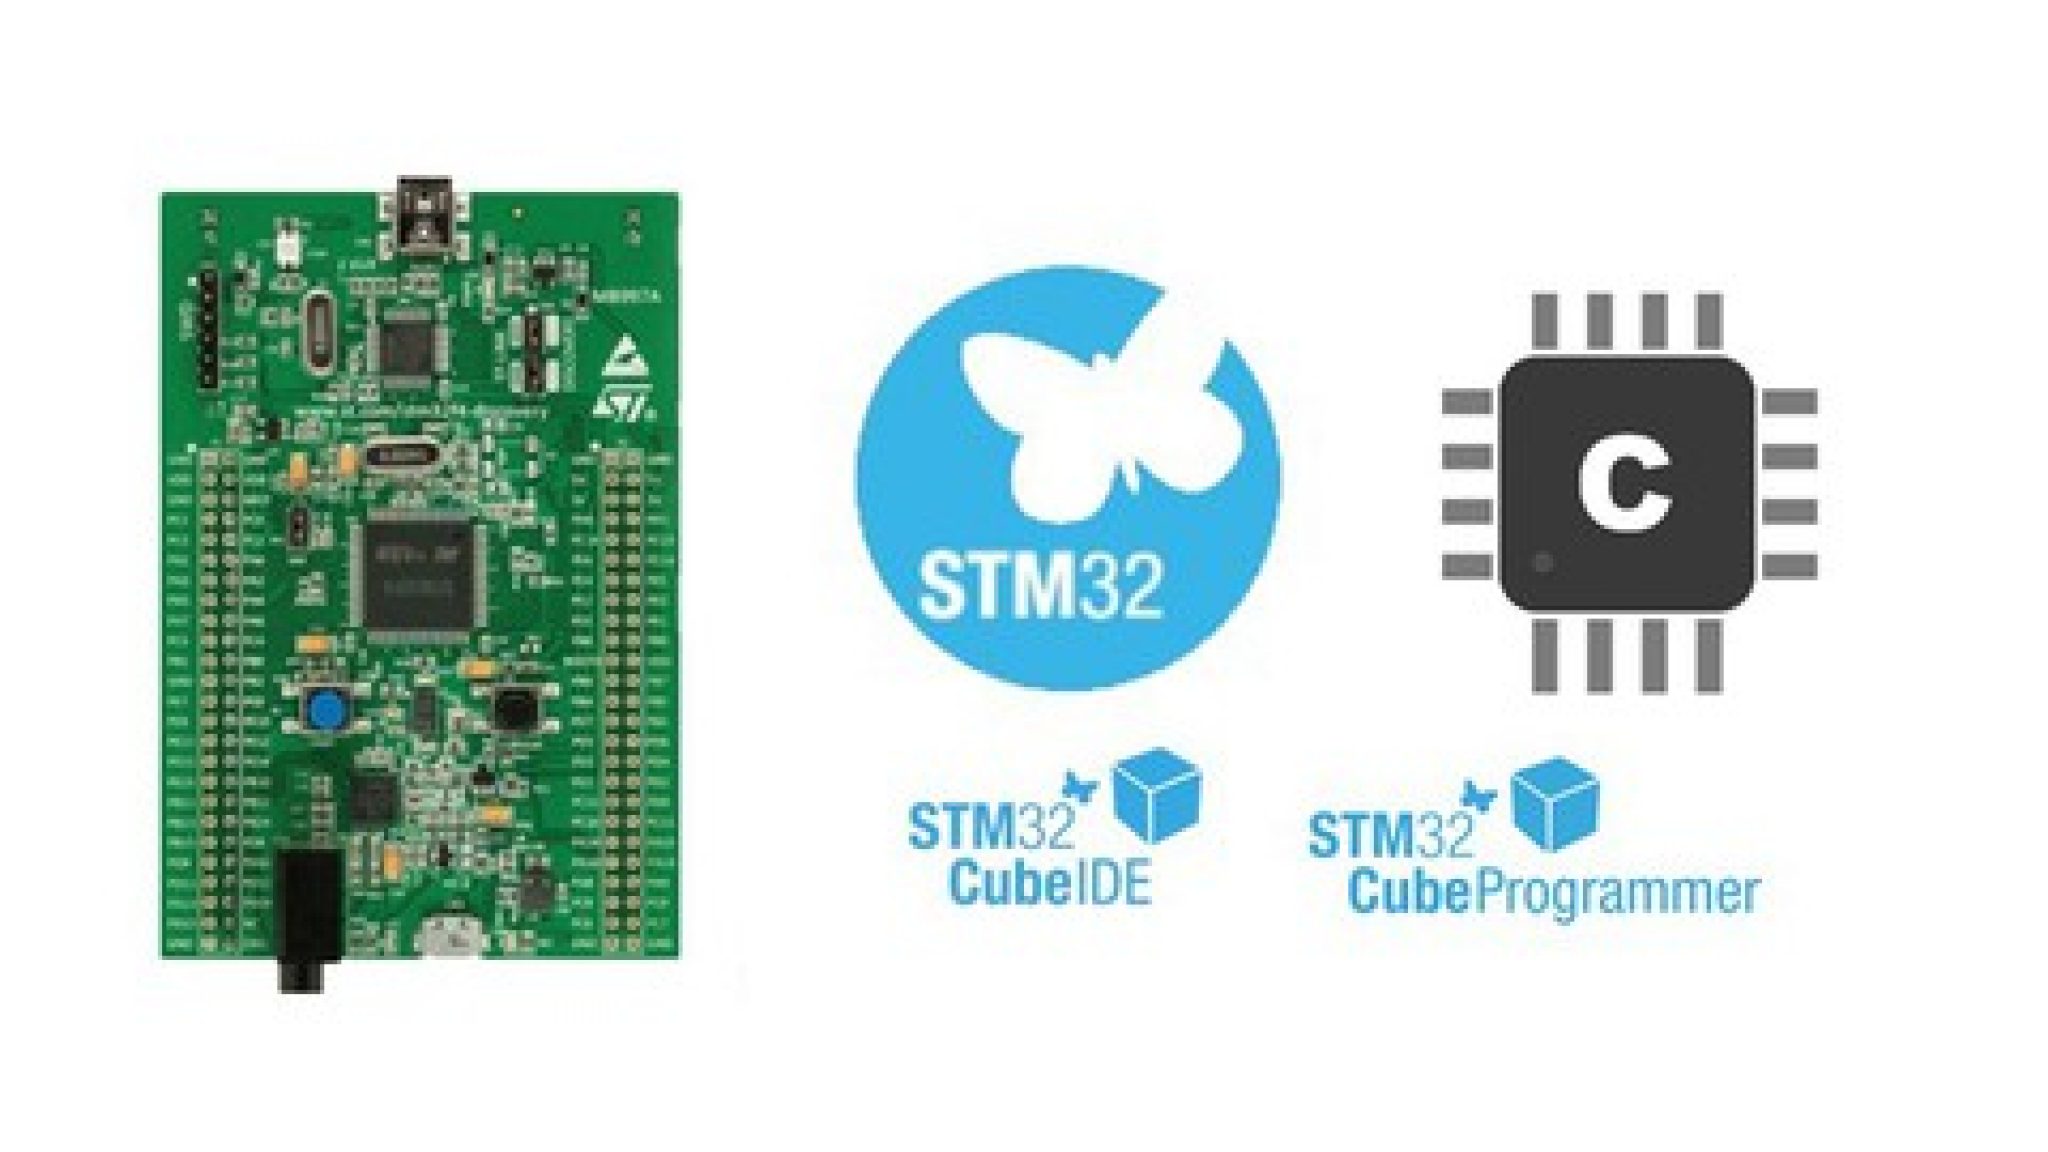 Stm cube. Stm32cubeide. Stm32 Cube ide. Stm32cubeide stm32cubemx. Stm32cubeide archlinux.